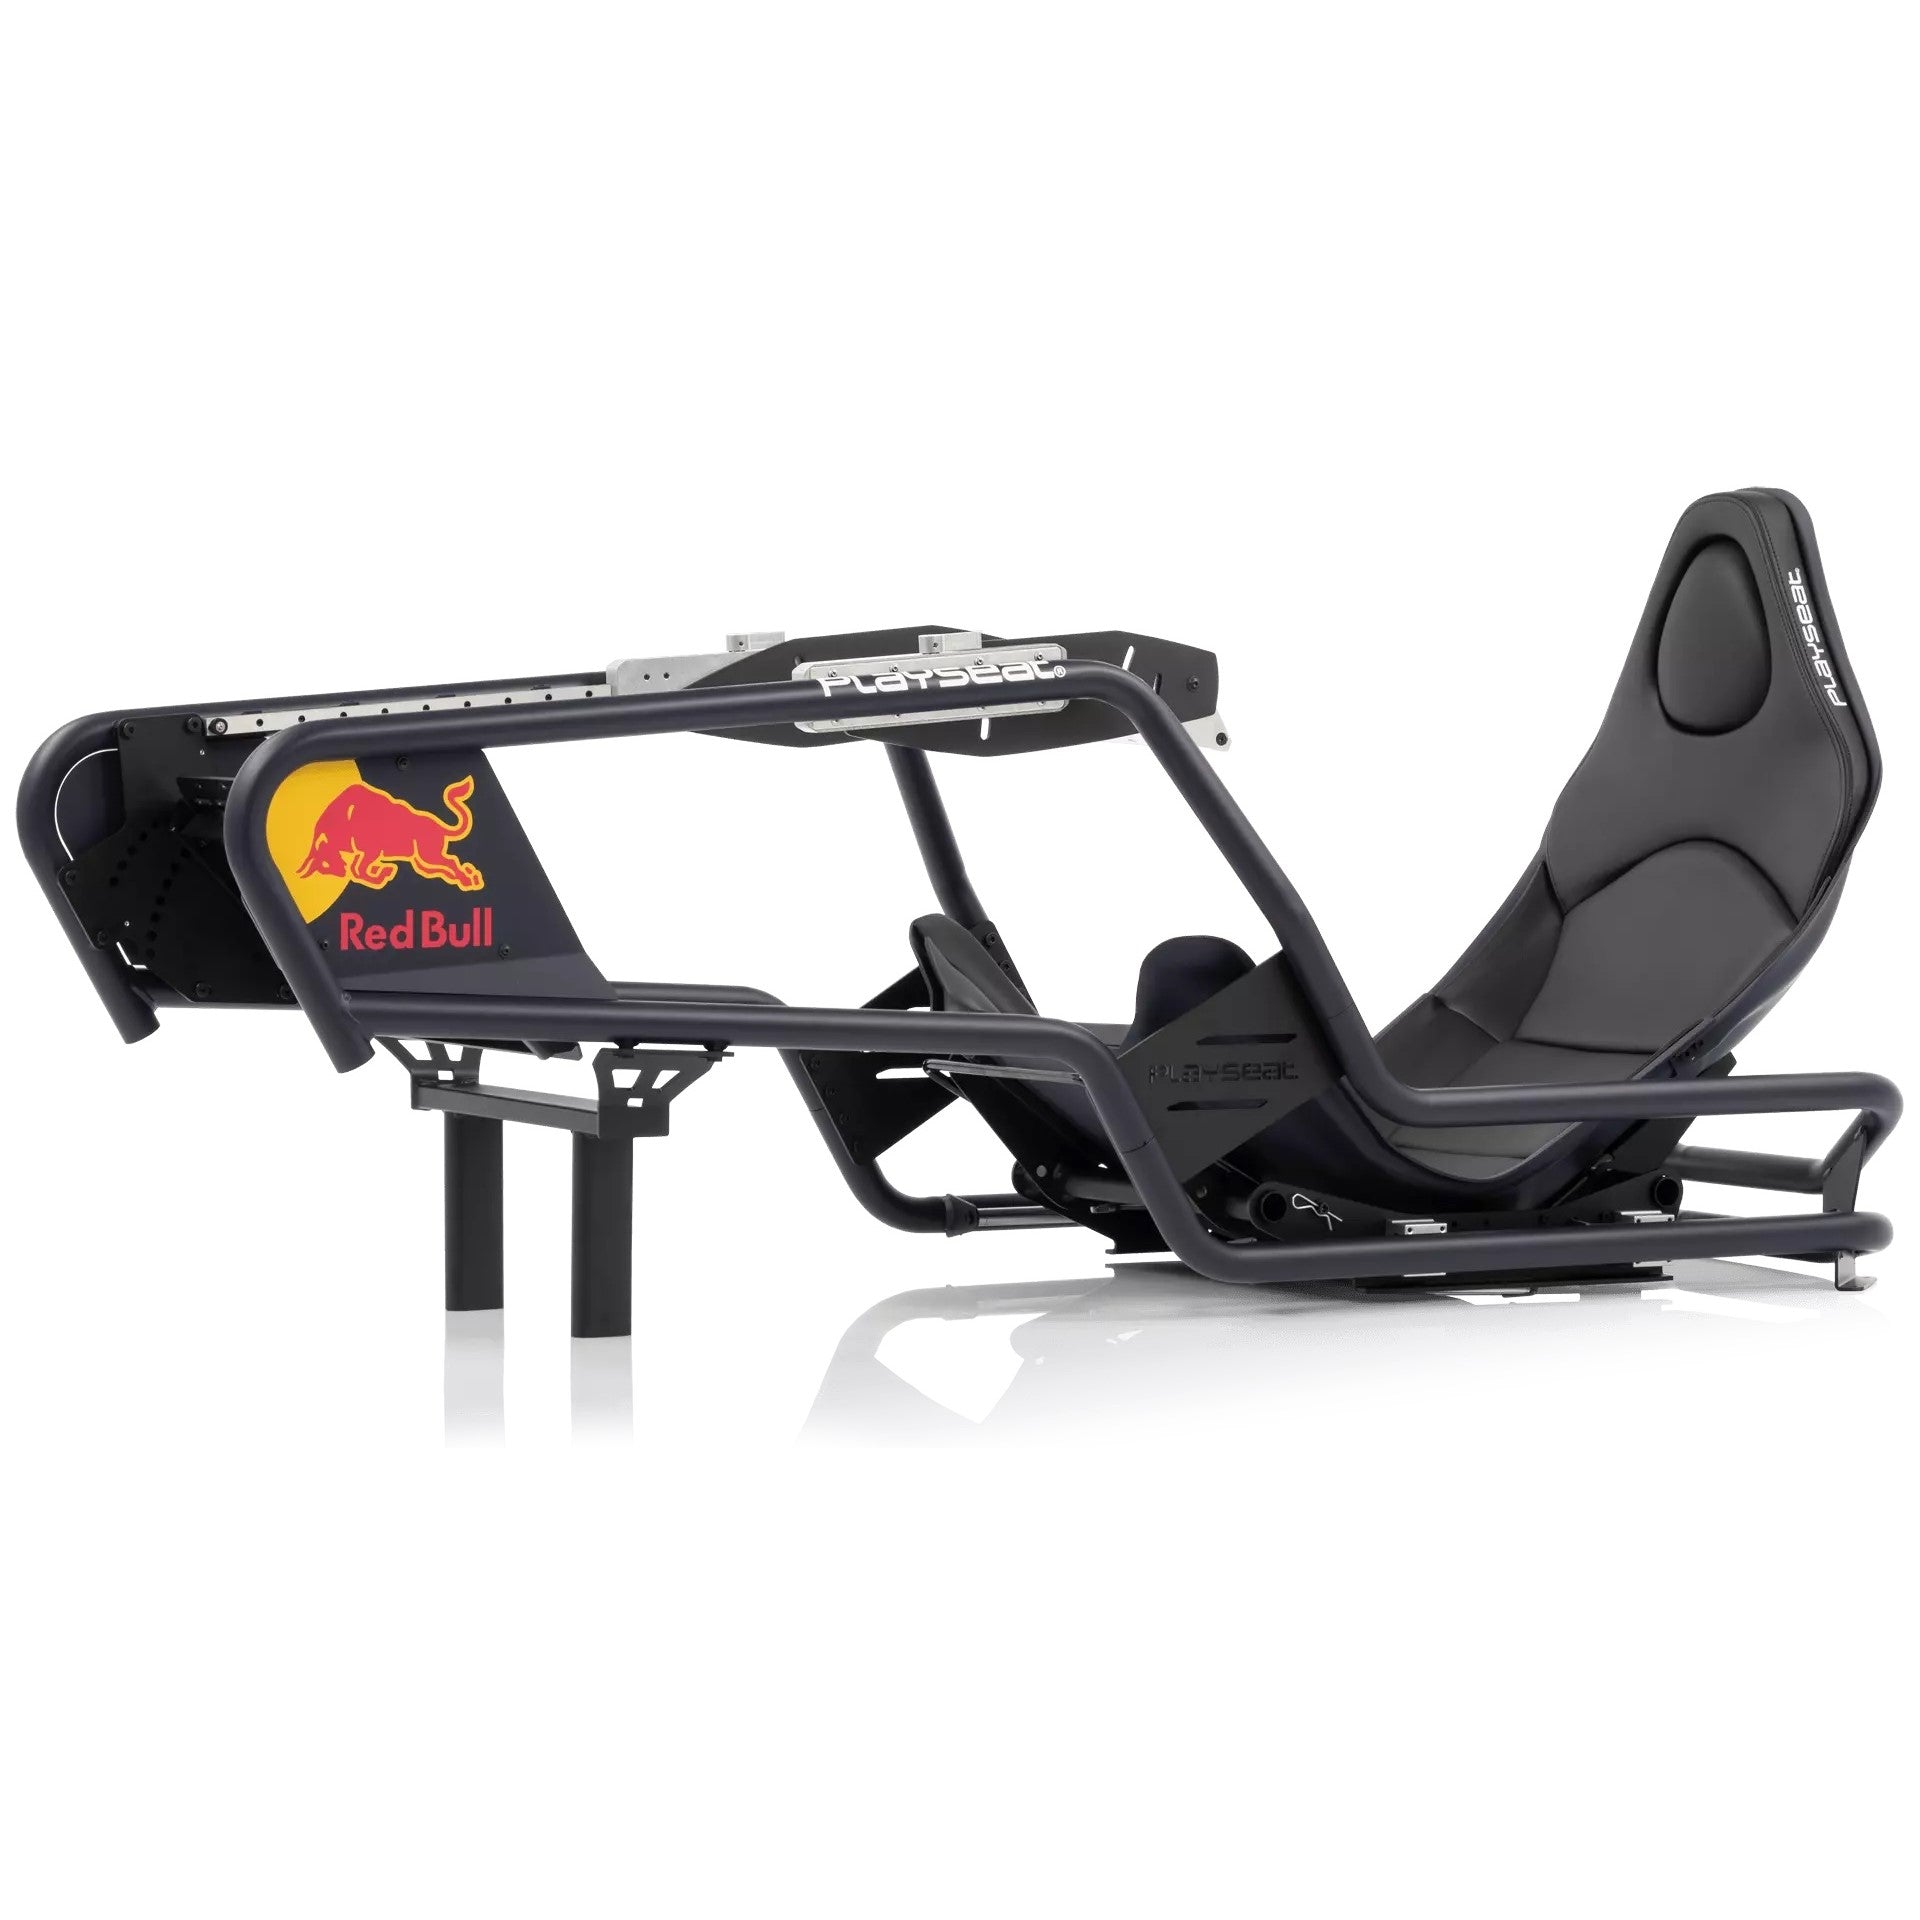 Playseat - Playseat® Formula White - Pro Racing Seat - PC - PS